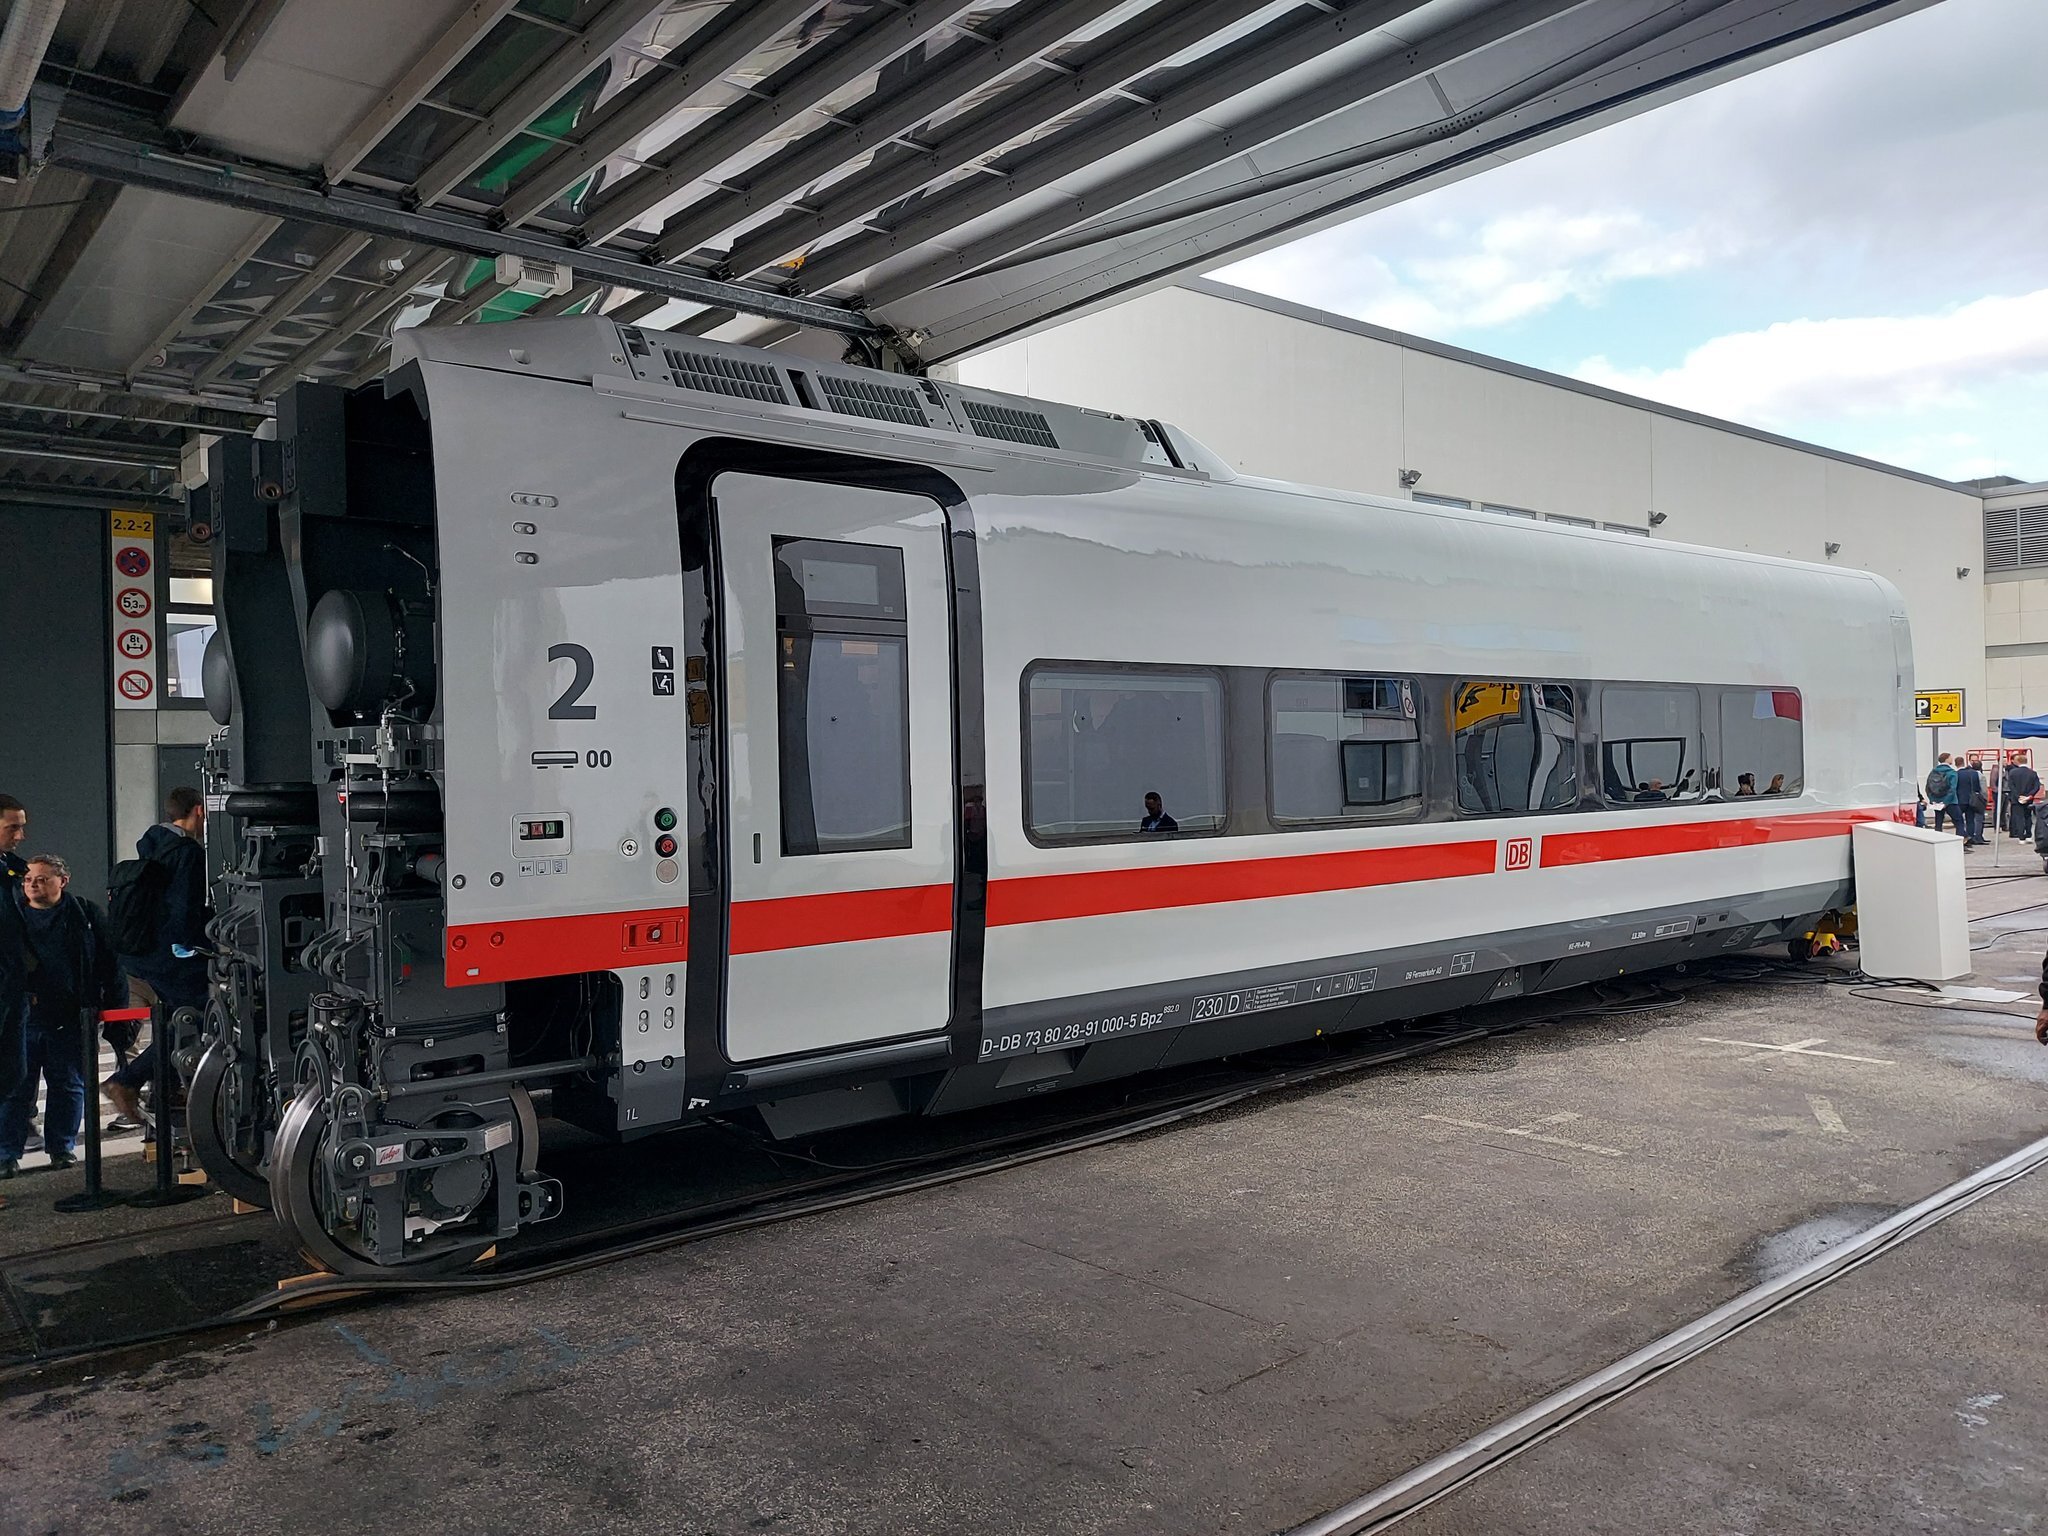 The Deutsche Bahn ICE L low-floor locomotive-hauled coach manufactured by Talgo